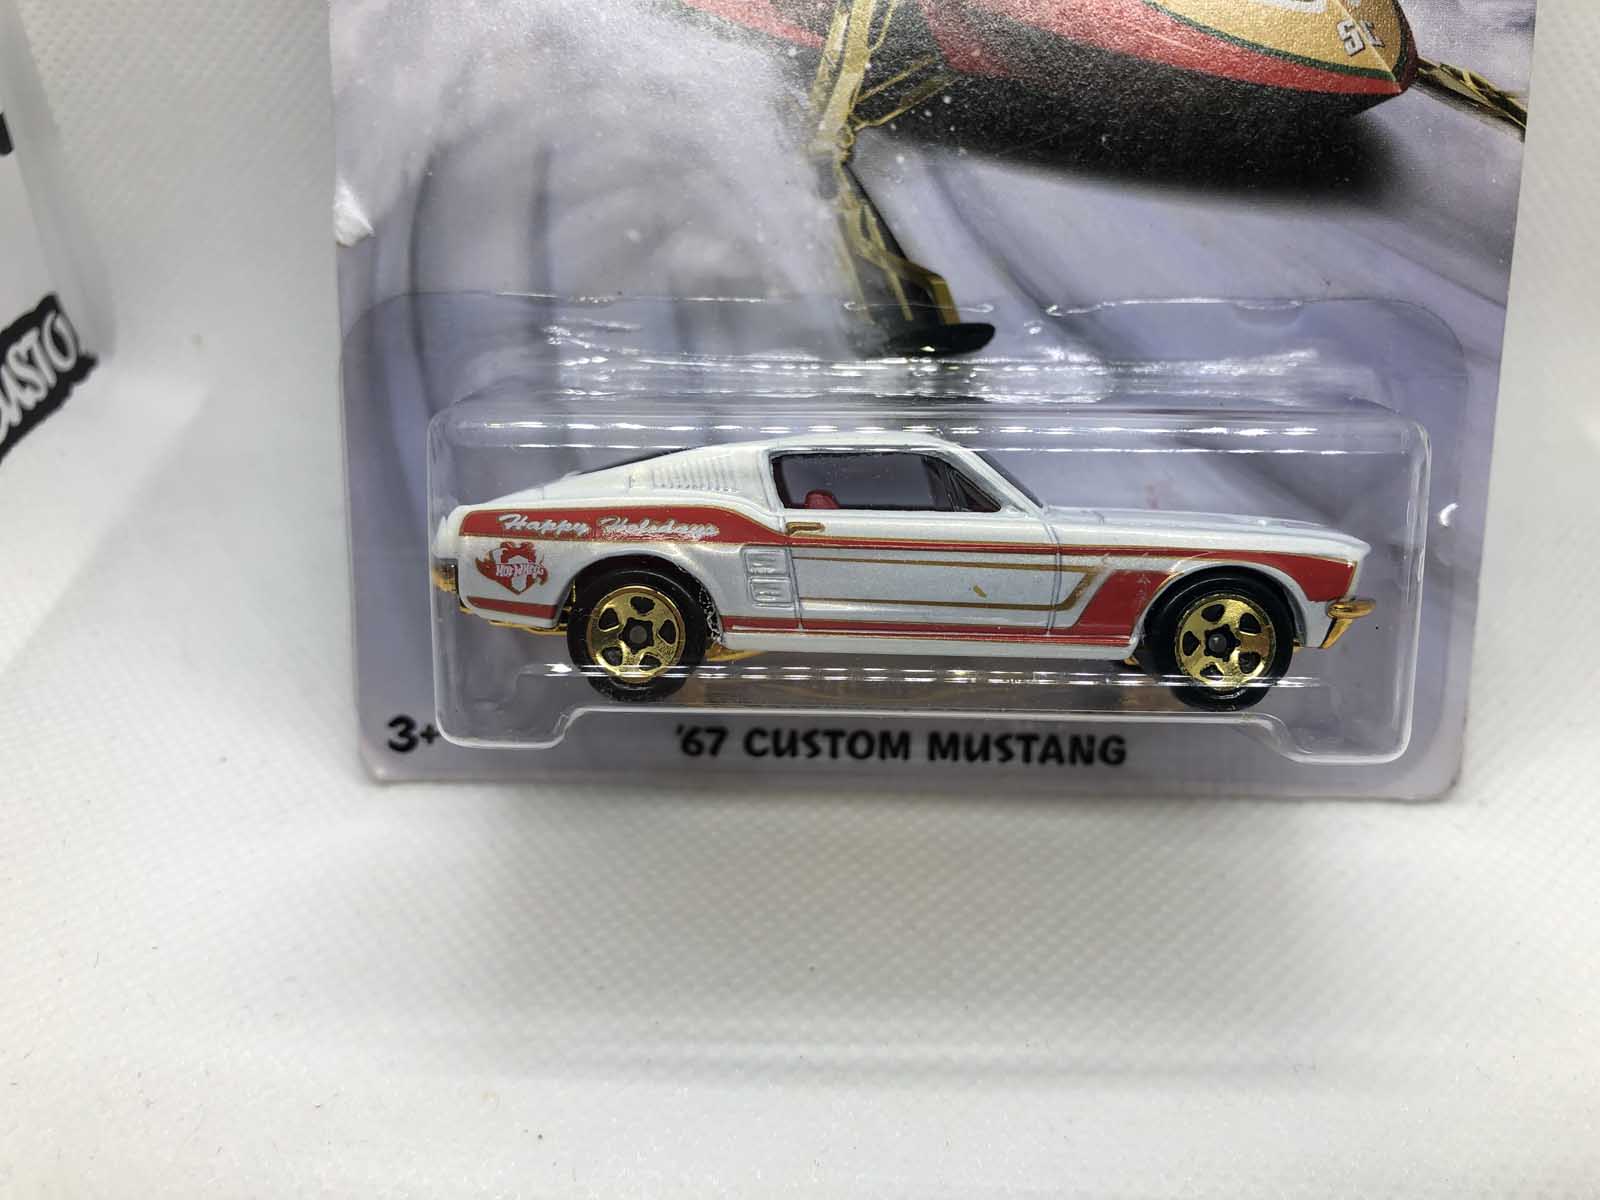 67 Custom Mustang Hot Wheels